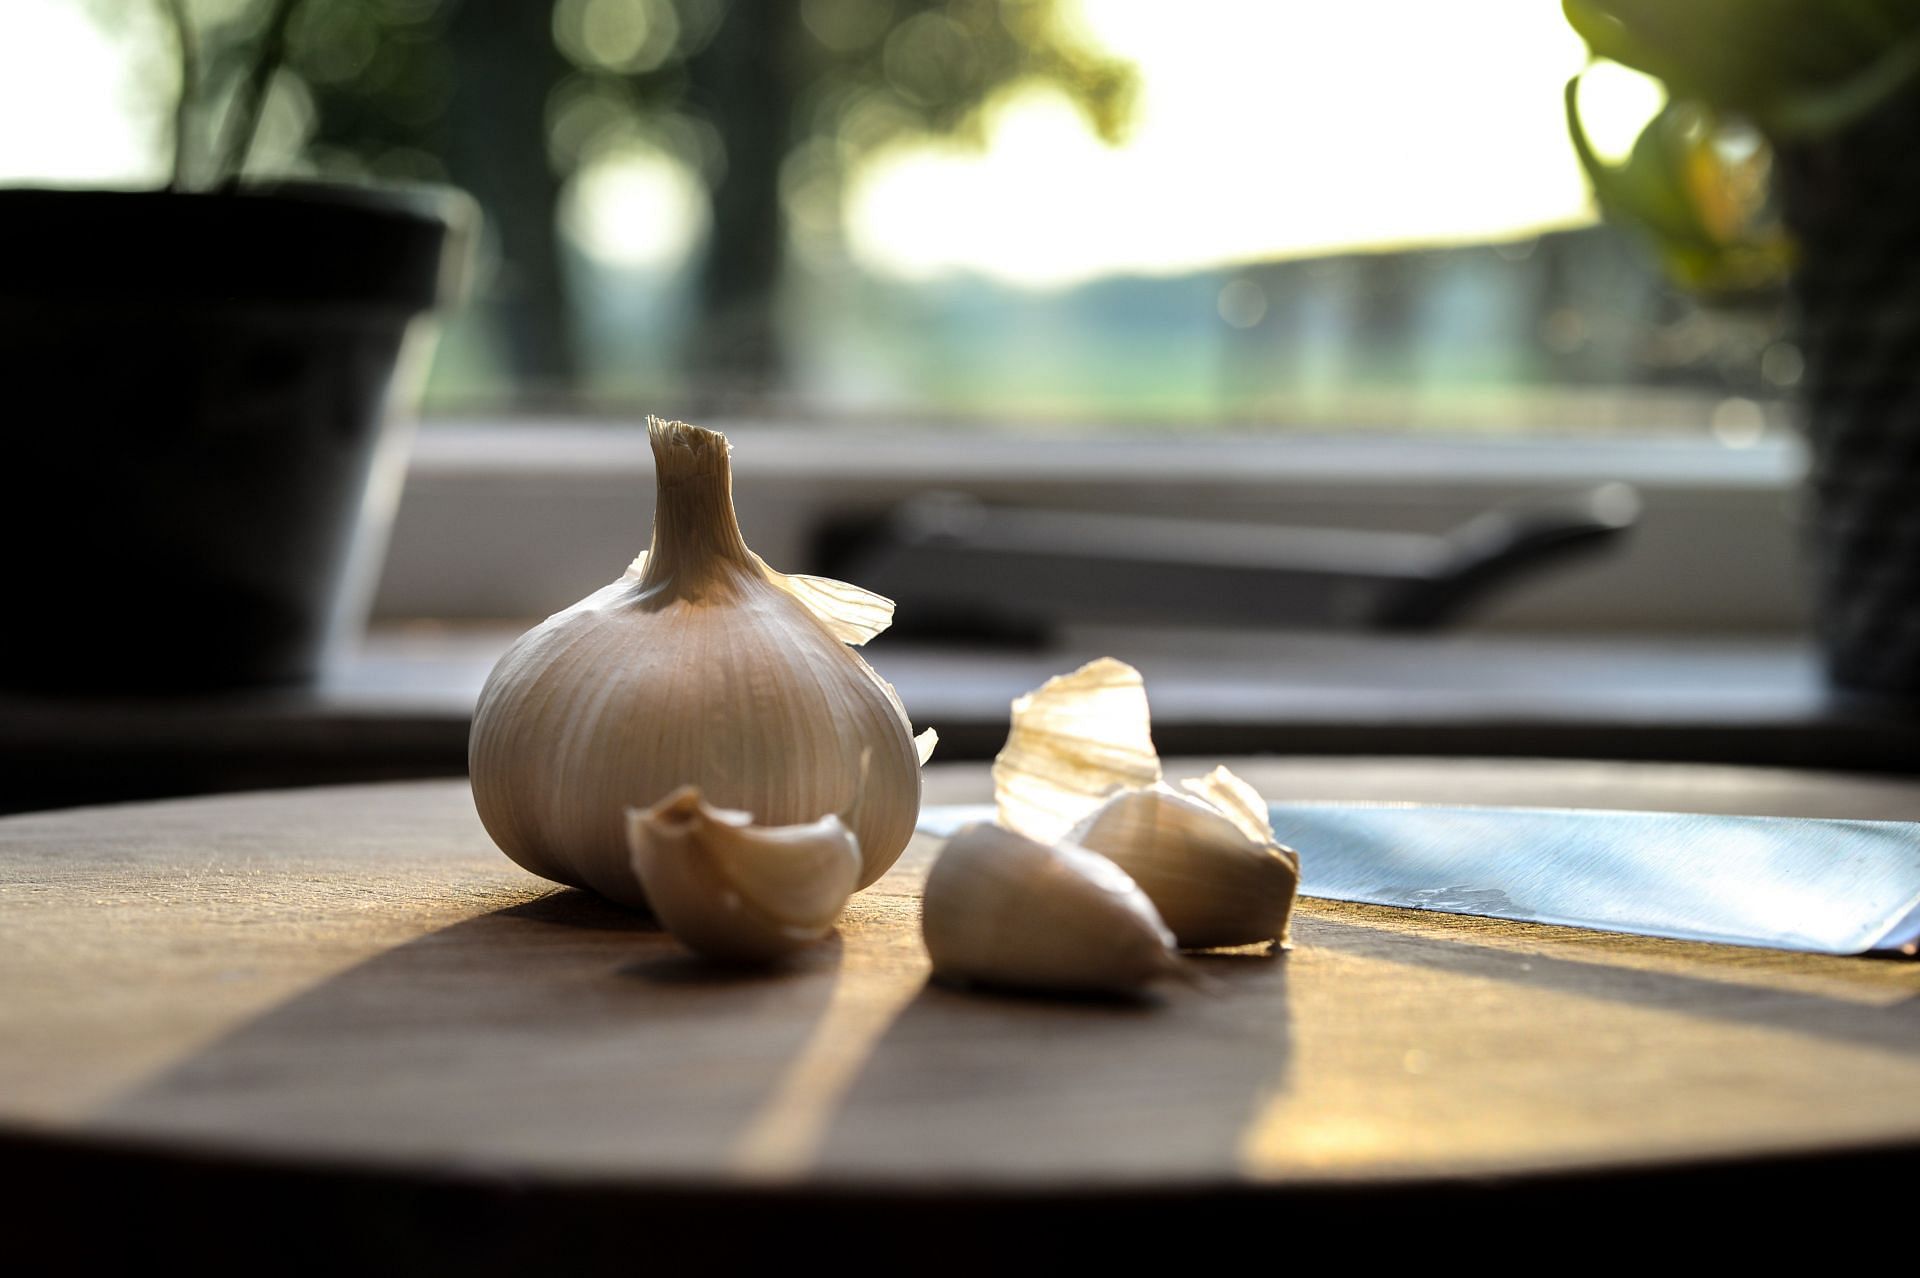 Raw garlic in the morning increases appetite (Image via Pexels/ Skitterphoto)